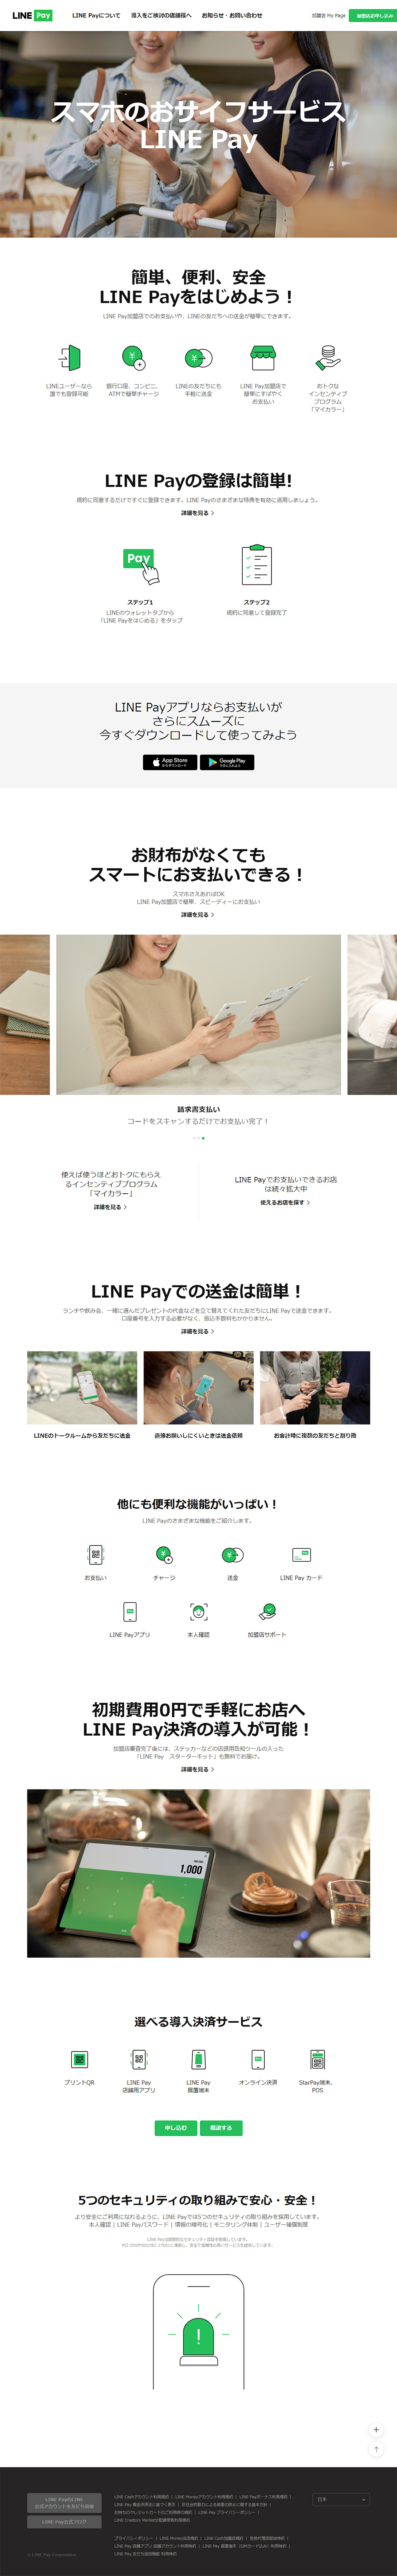 LINE Pay_pc_1